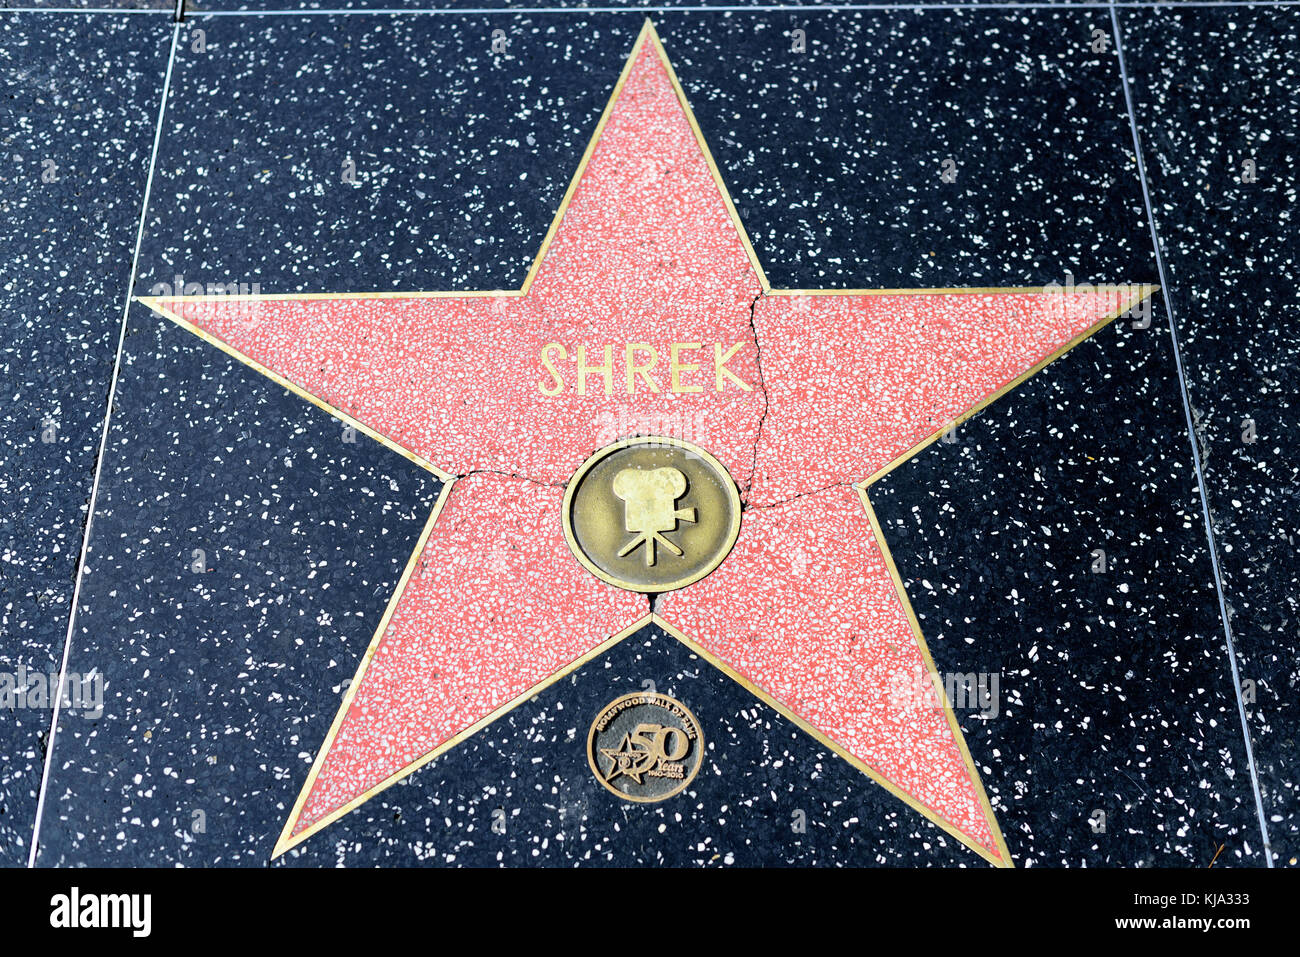 HOLLYWOOD, CA - DEZEMBER 06: Shrek-Star auf dem Hollywood Walk of Fame in Hollywood, Kalifornien am 6. Dezember 2016. Stockfoto